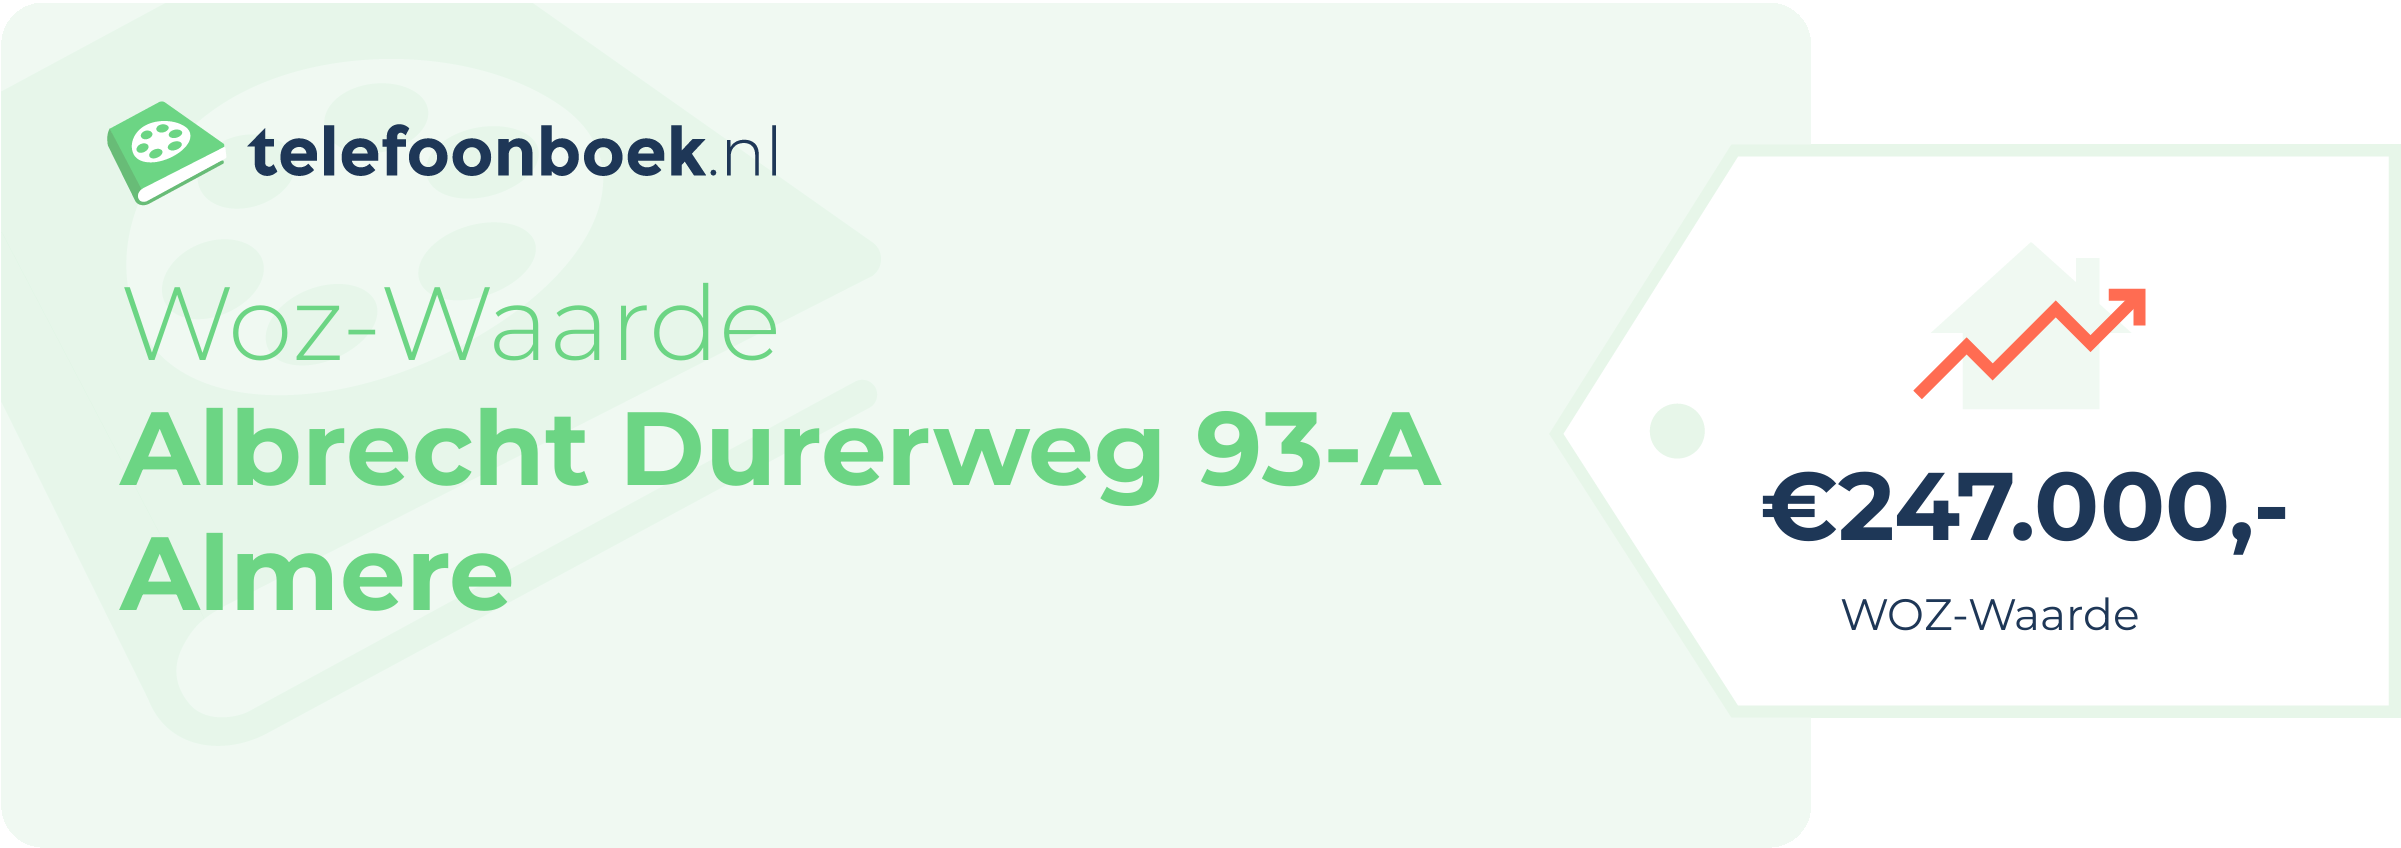 WOZ-waarde Albrecht Durerweg 93-A Almere